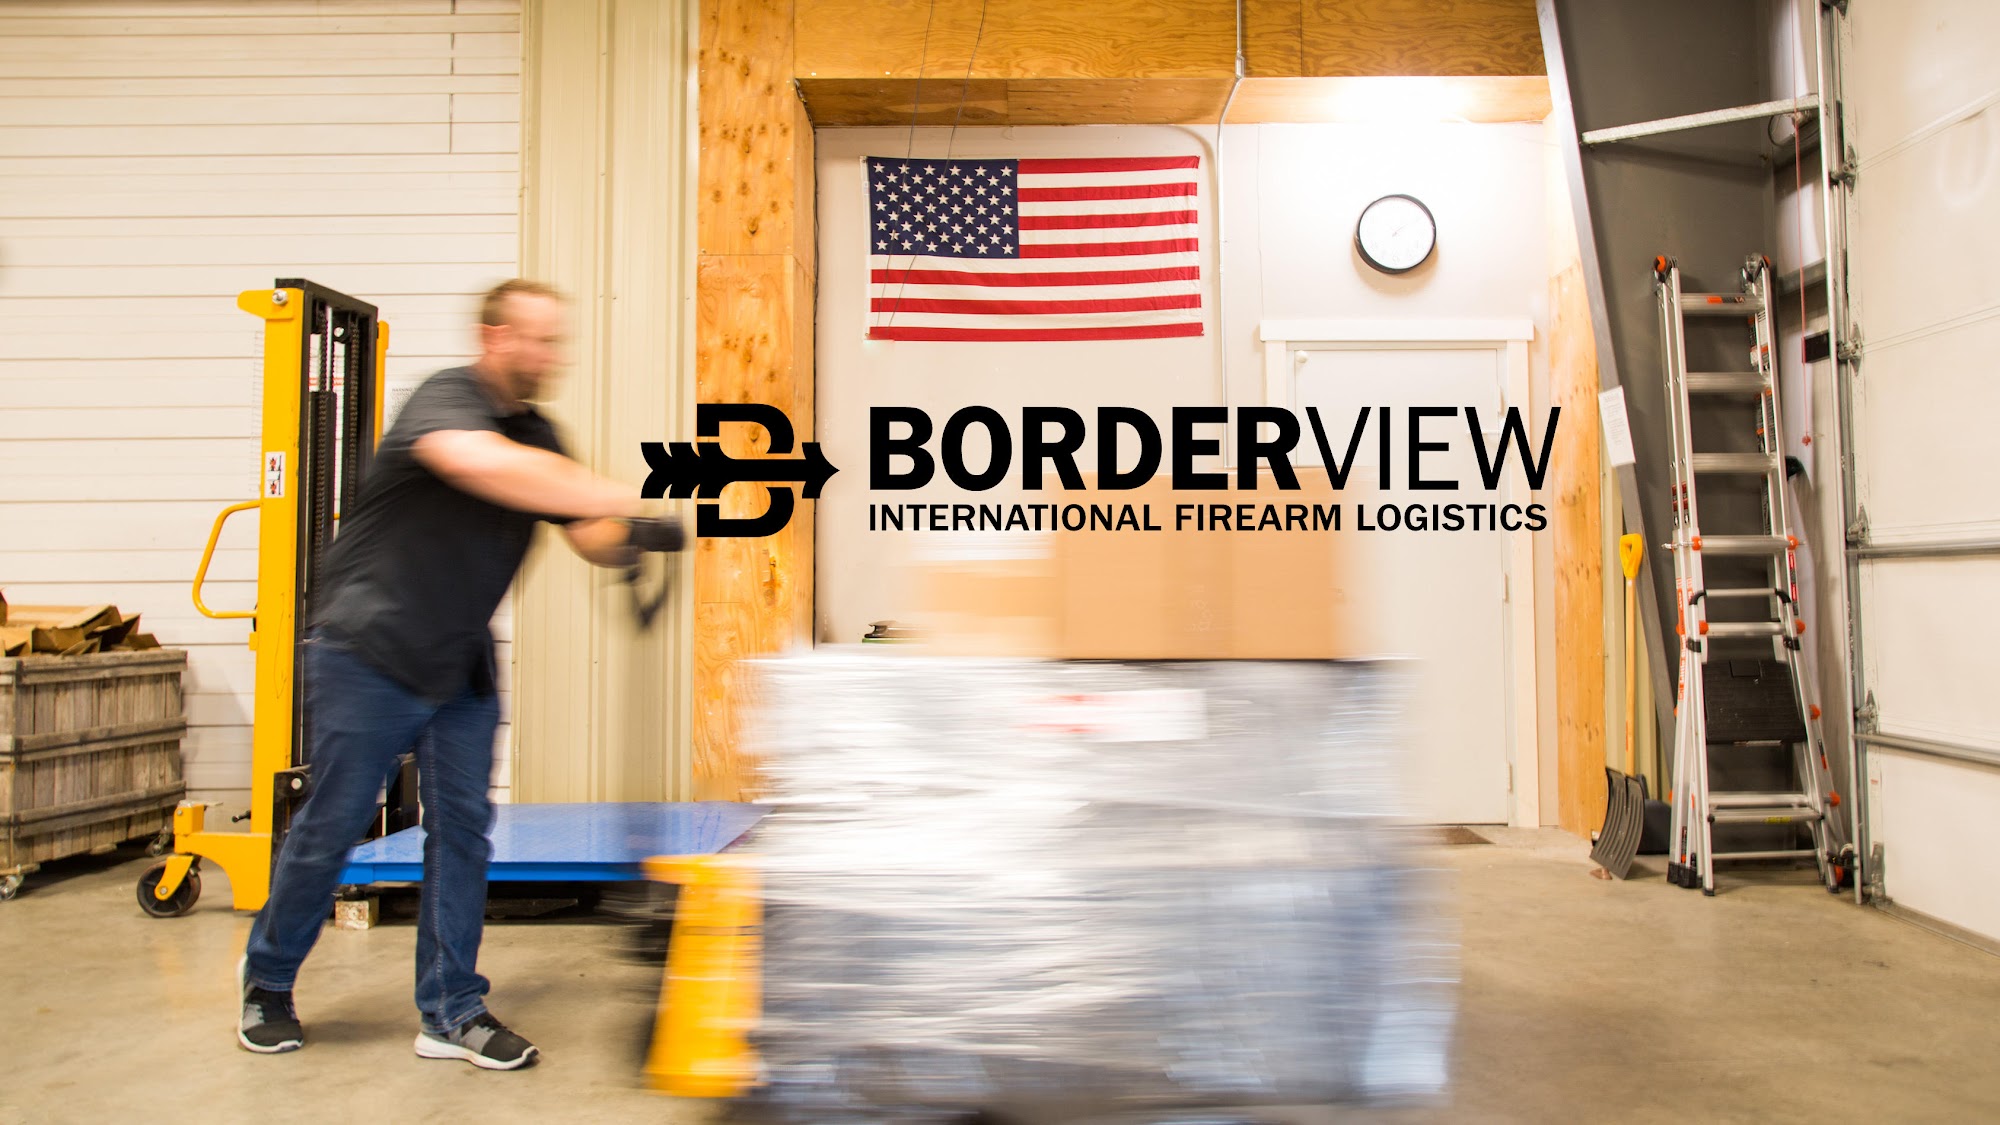 BORDERVIEW International Firearm Logistics